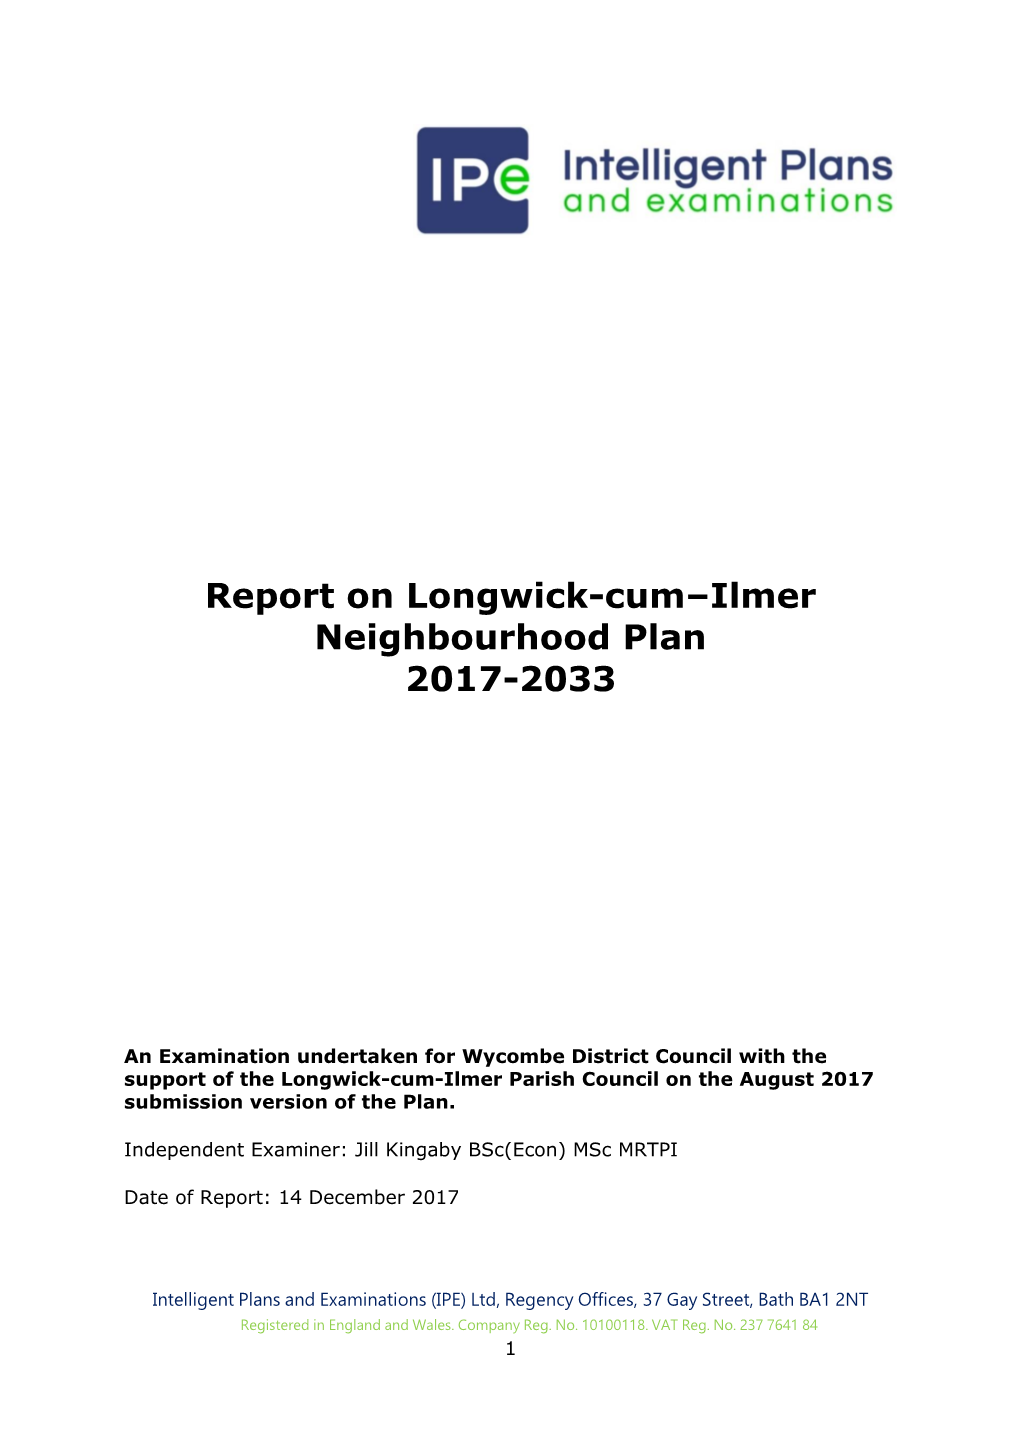 Report on Longwick-Cum–Ilmer Neighbourhood Plan 2017-2033